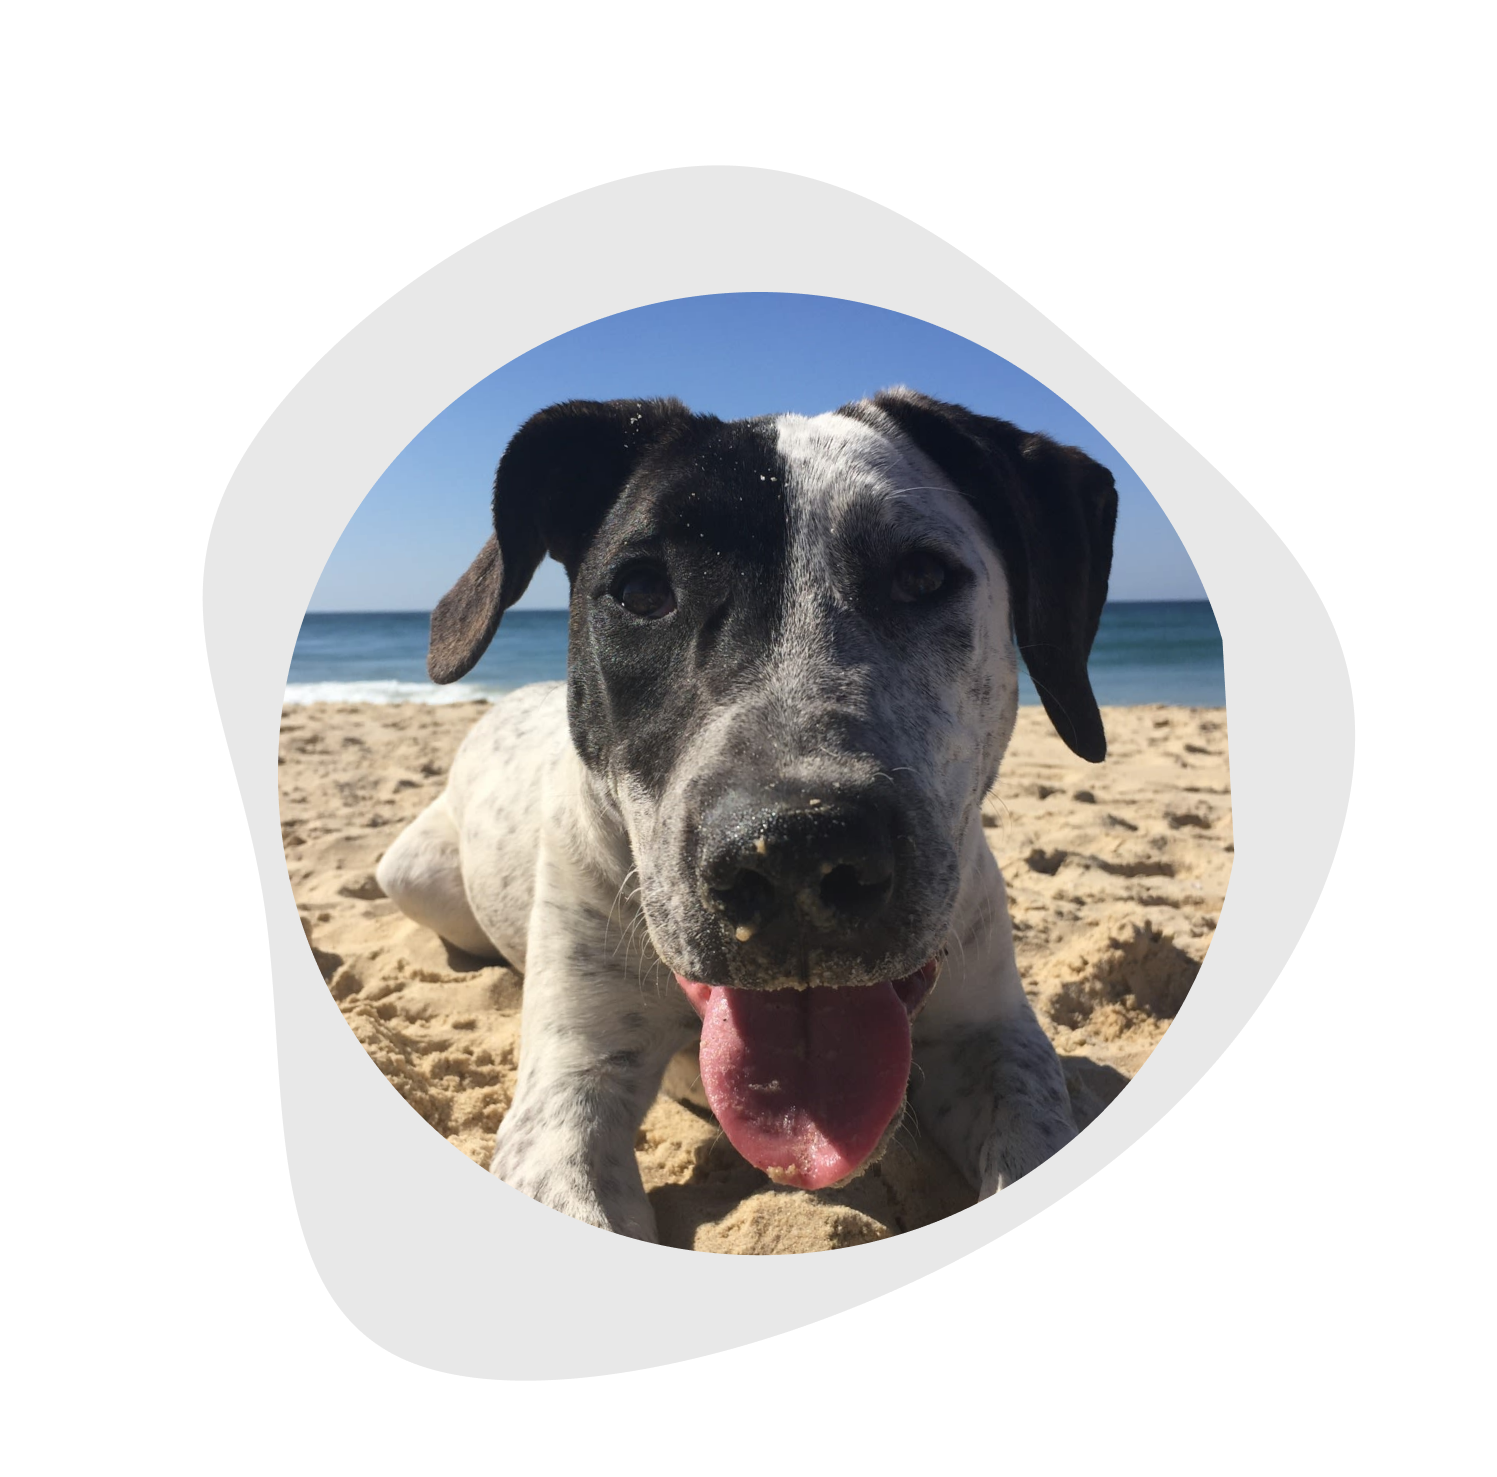 happy dog at beach